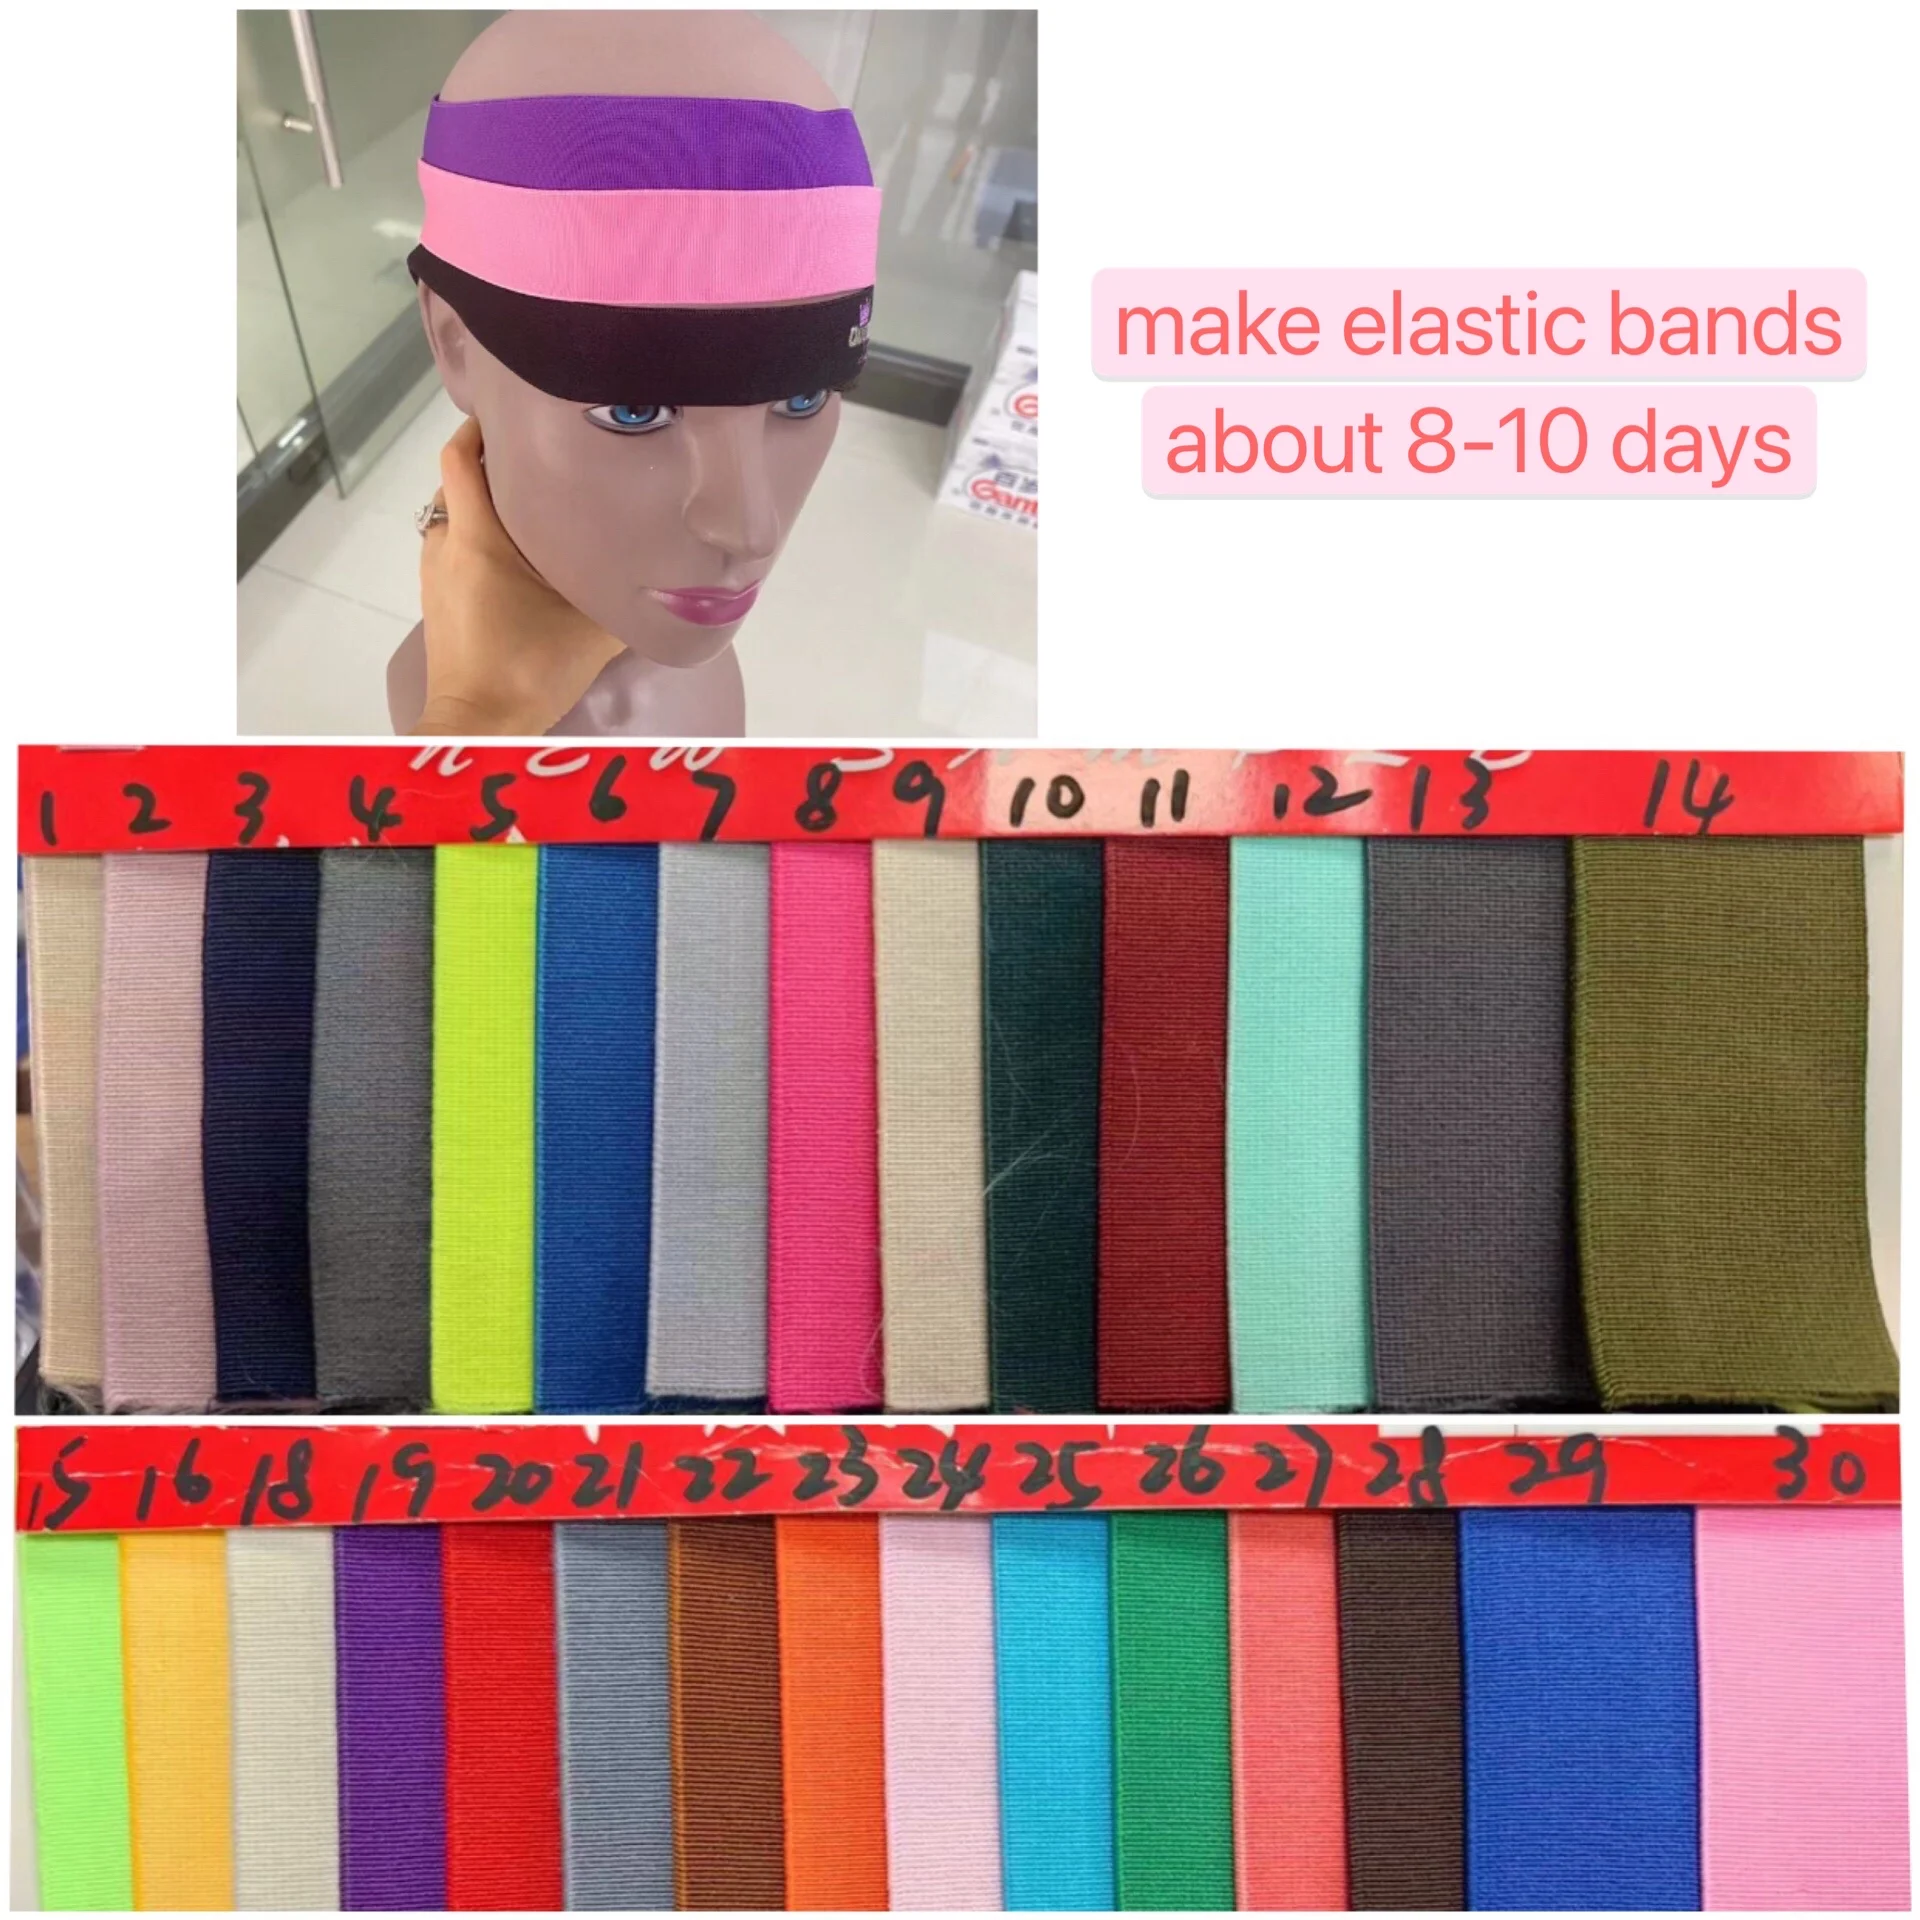 customized hair ties elastic hair bands